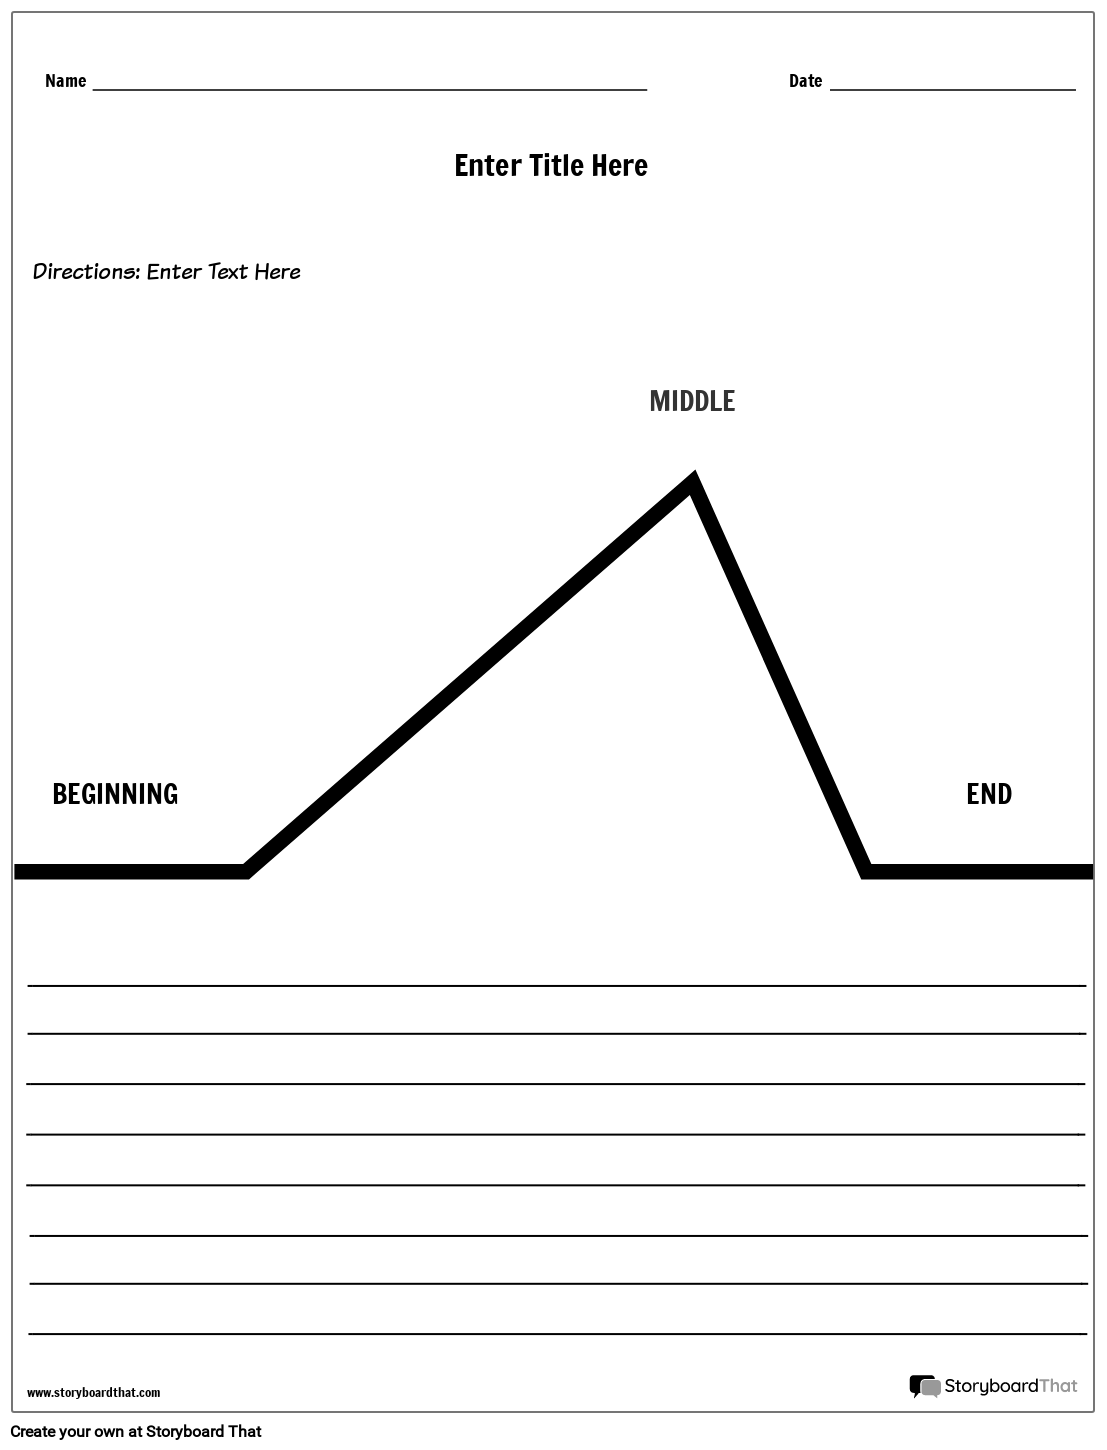 Plot Diagram Beginning, Middle, End